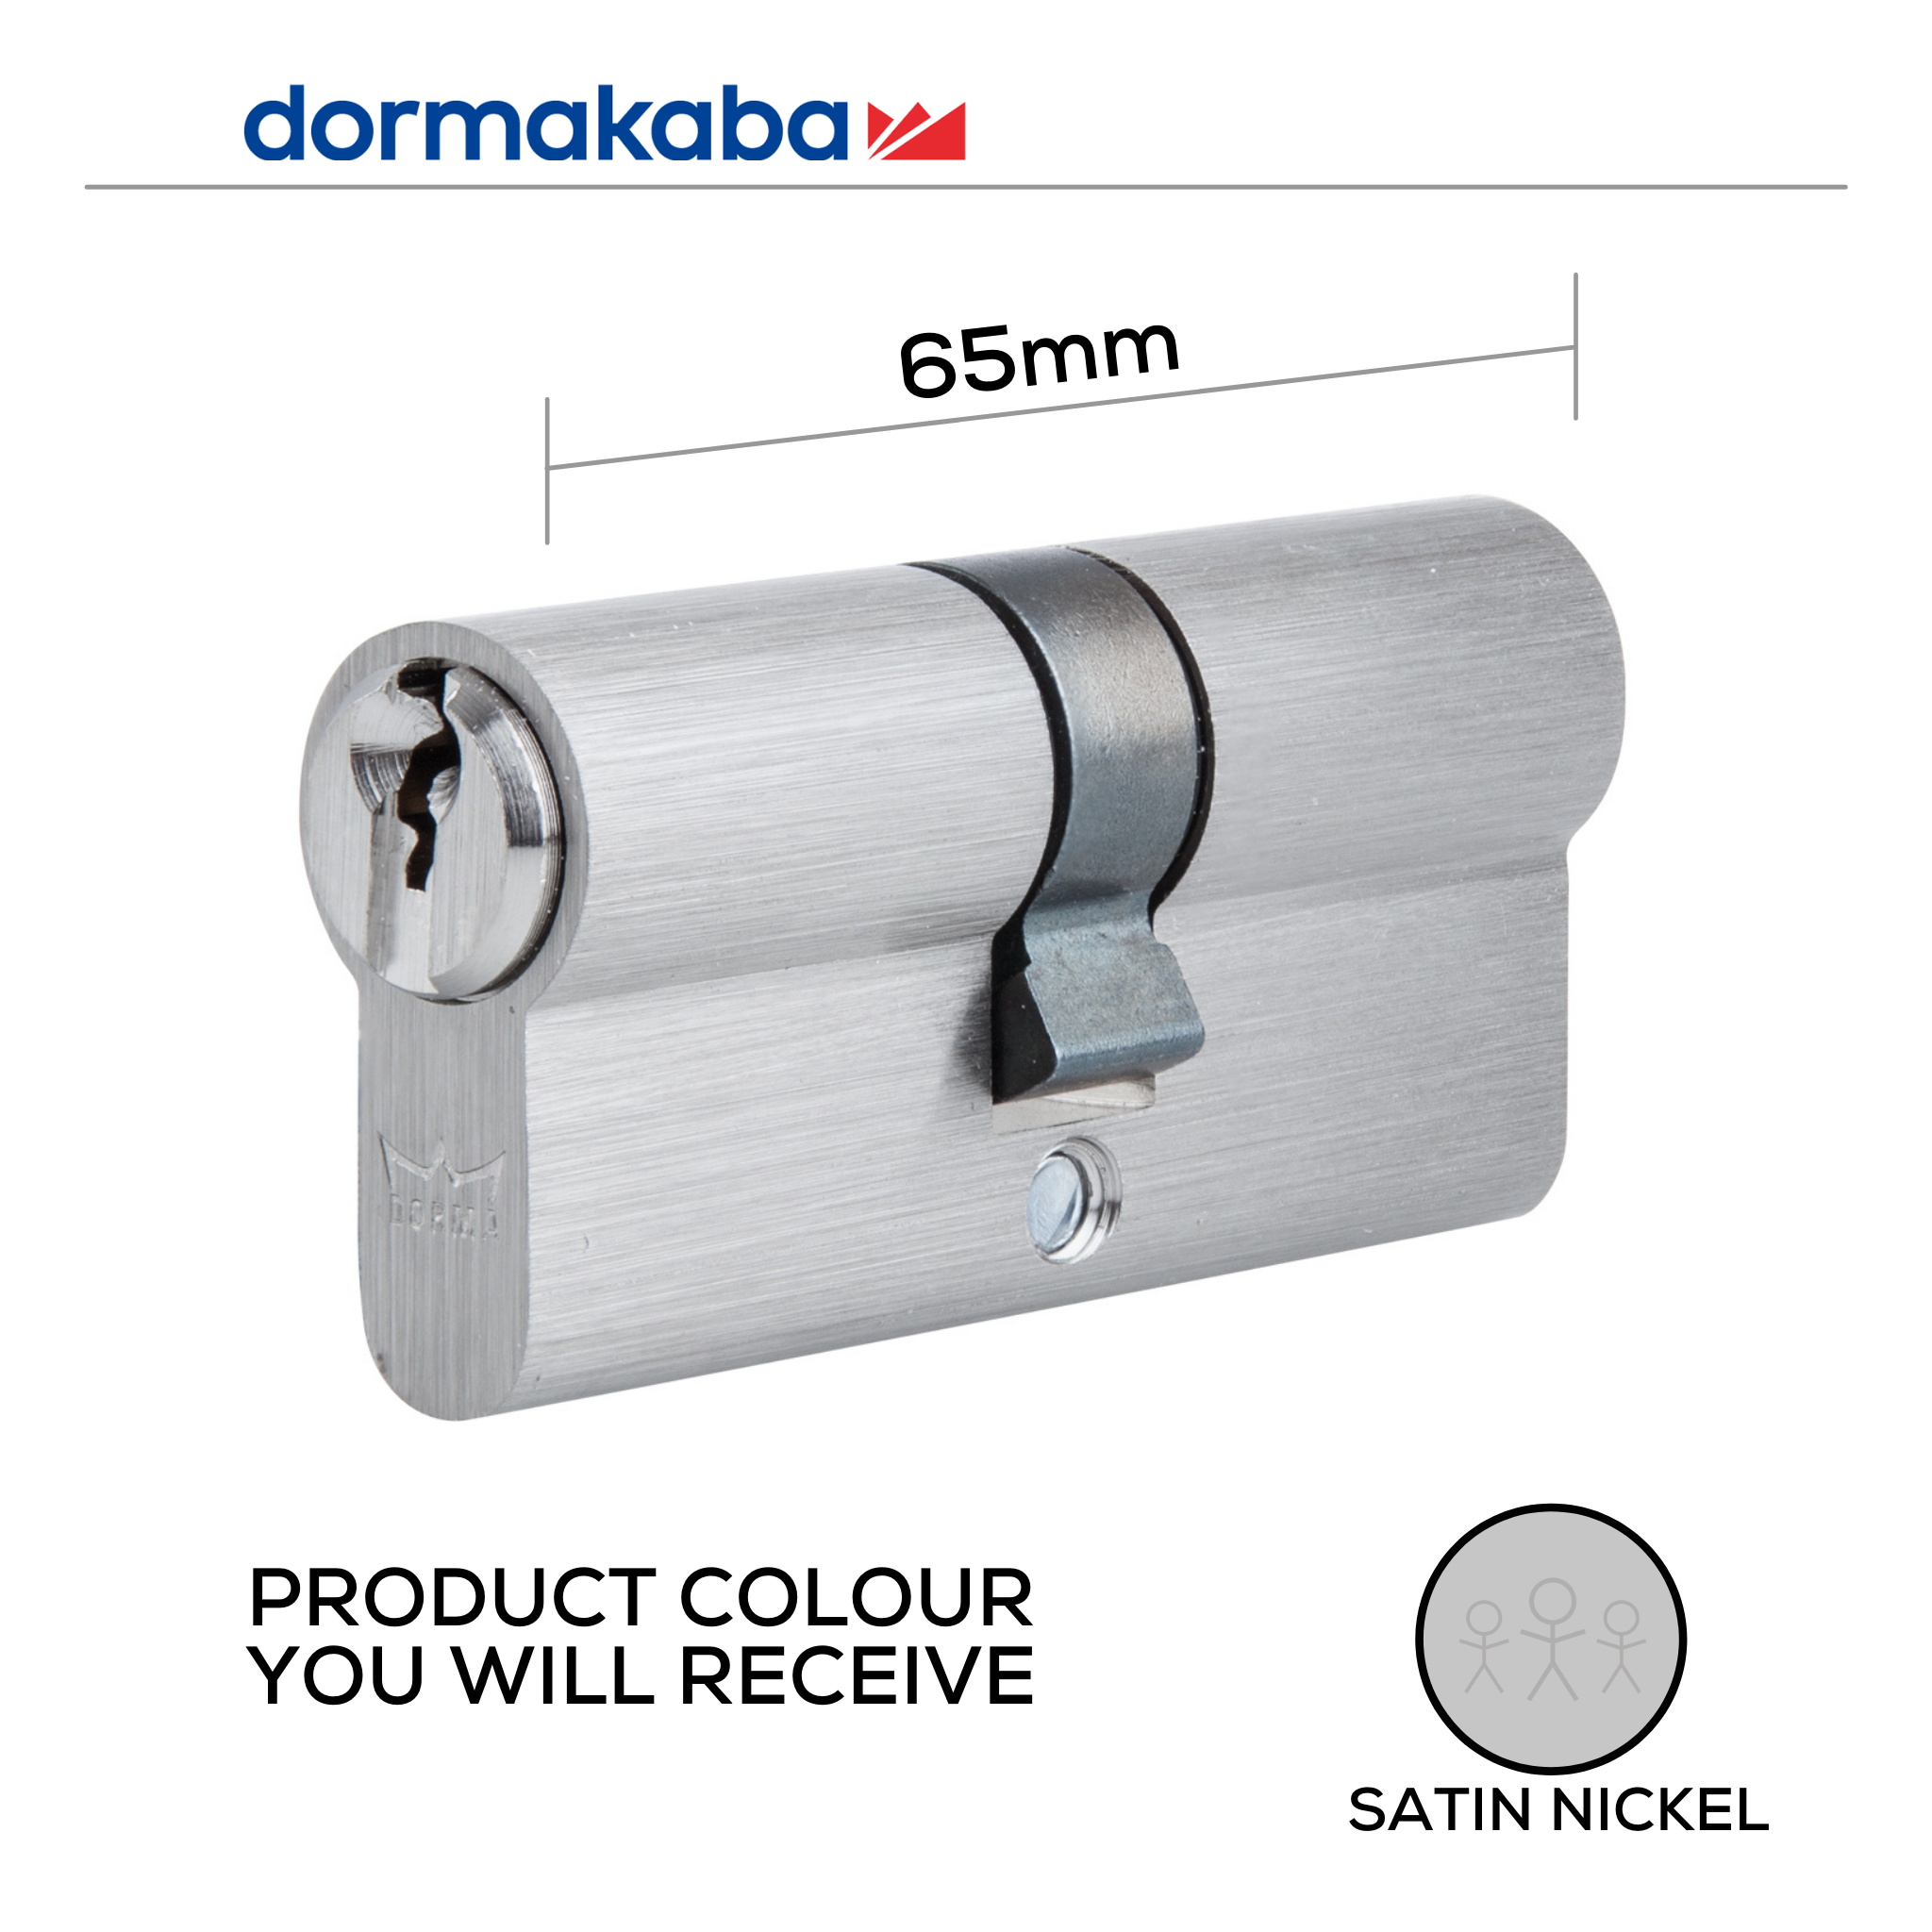 DDC056501 KD, 65mm - 32.5/32.5, Double Cylinder, Key to Key, Keyed to Differ (Standard), 2 Keys, 5 Pin, Satin Nickel, DORMAKABA